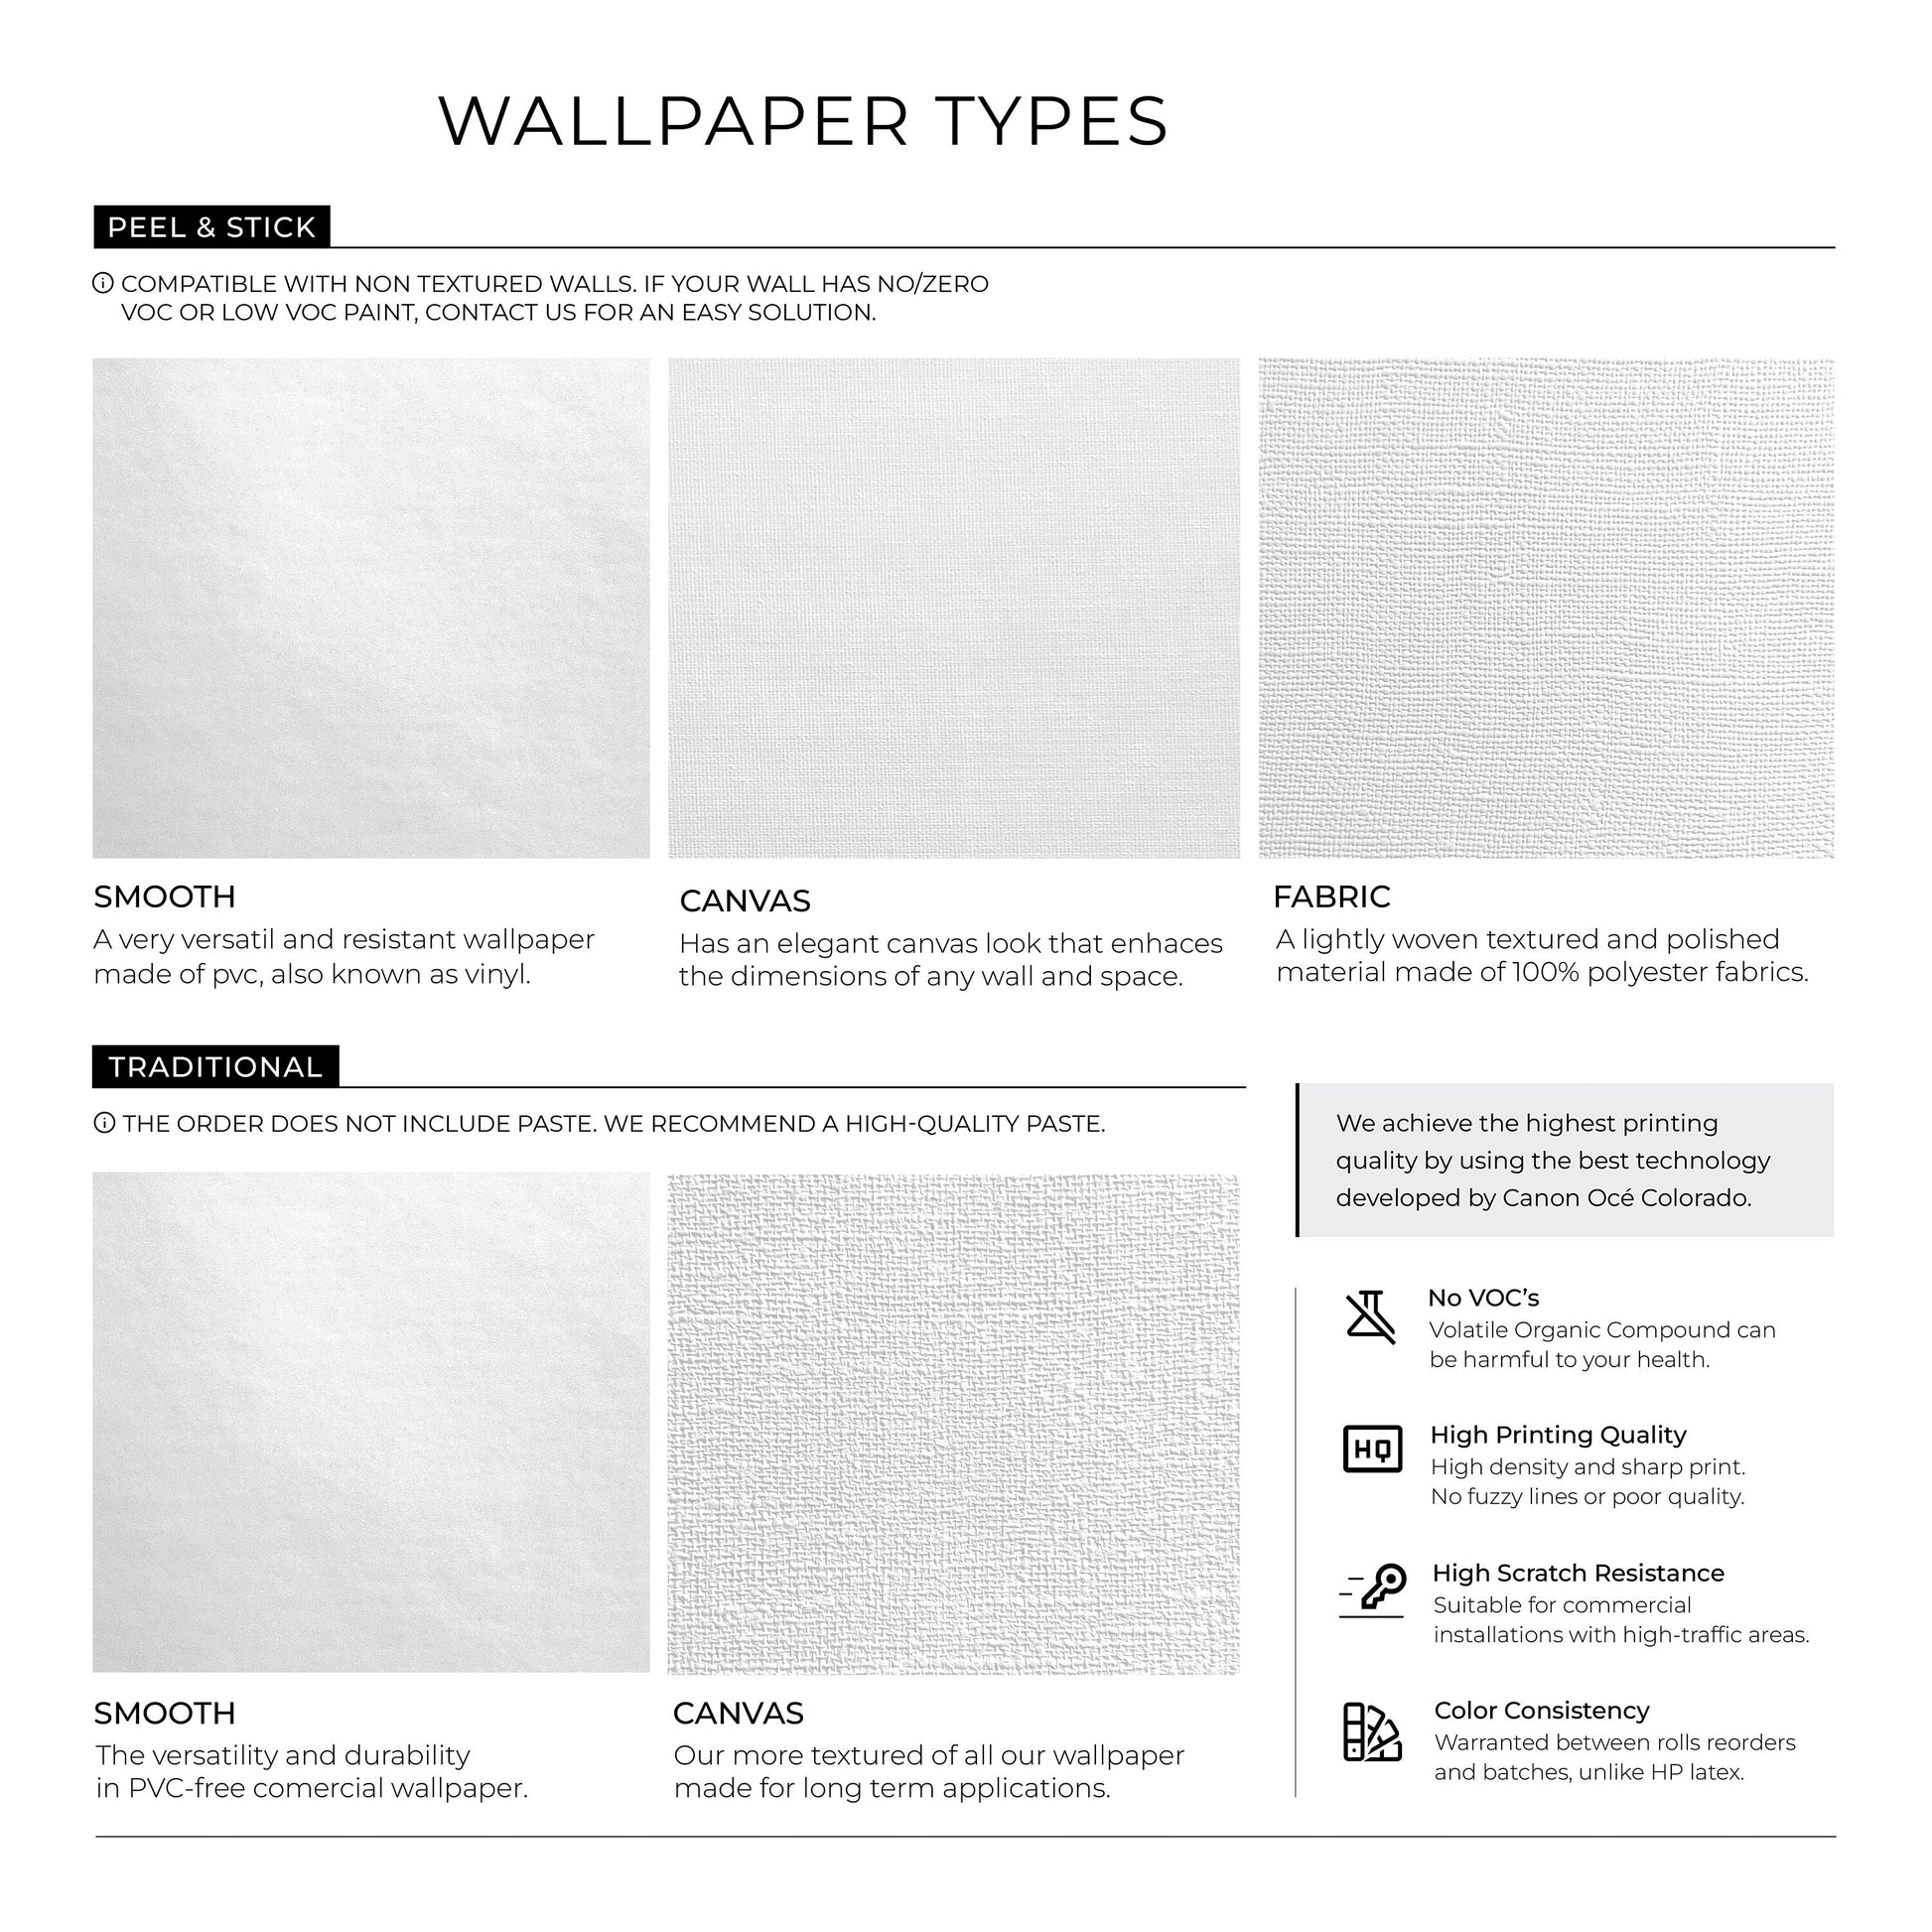 Checkered Tiles Wallpaper Removable Wallpaper Home Decor Wall Art Room Decor / Black and White Squares Wallpaper - B789